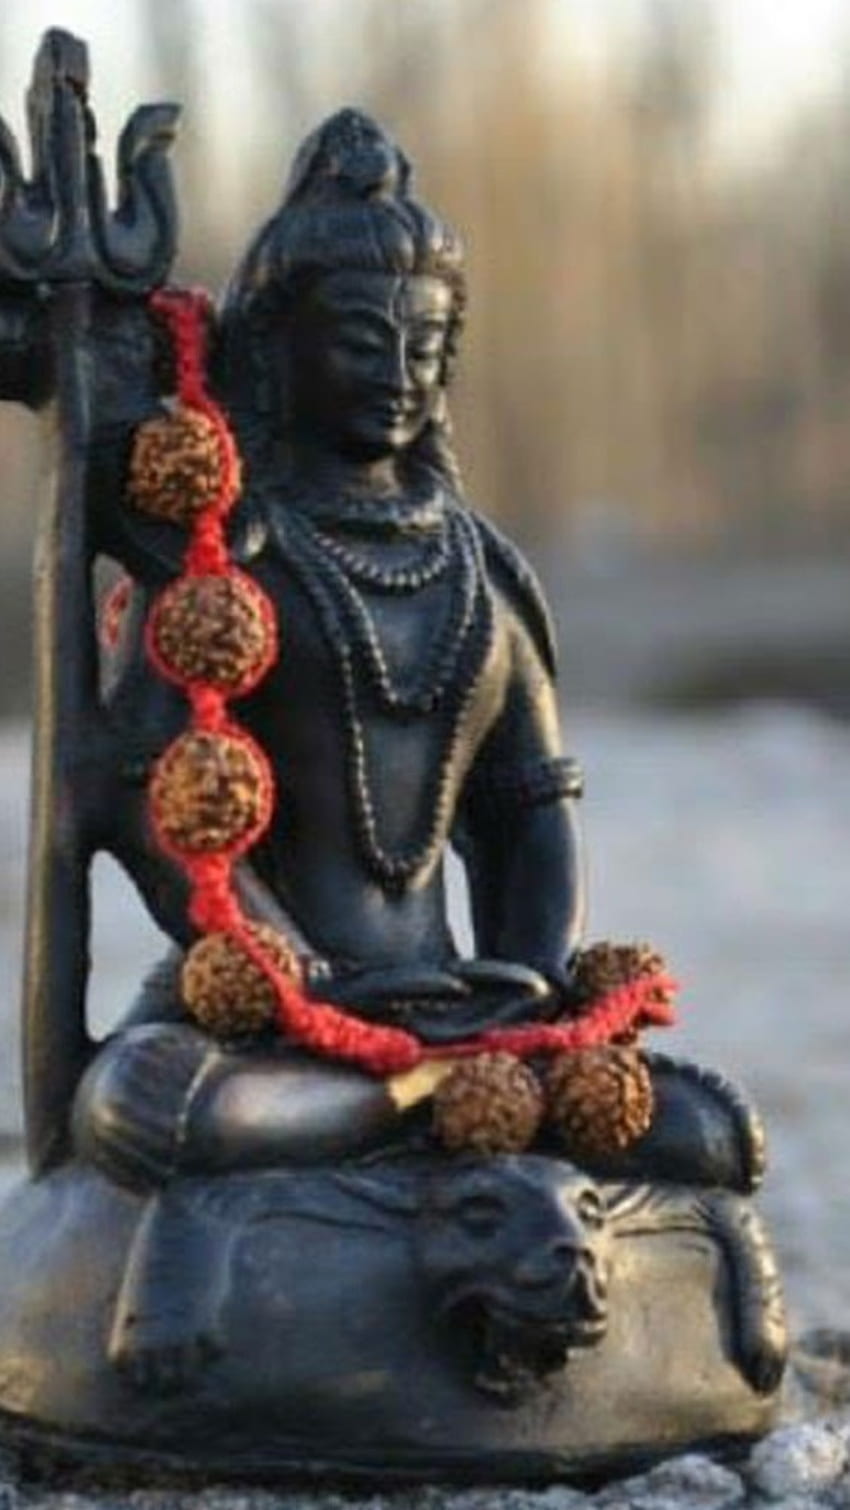 500+lord shiv pictures collection - APC HUB FULL KNOWLEDGE & EMTERTAIN |  Rudraksha, Shiva, Rudraksha jewelry